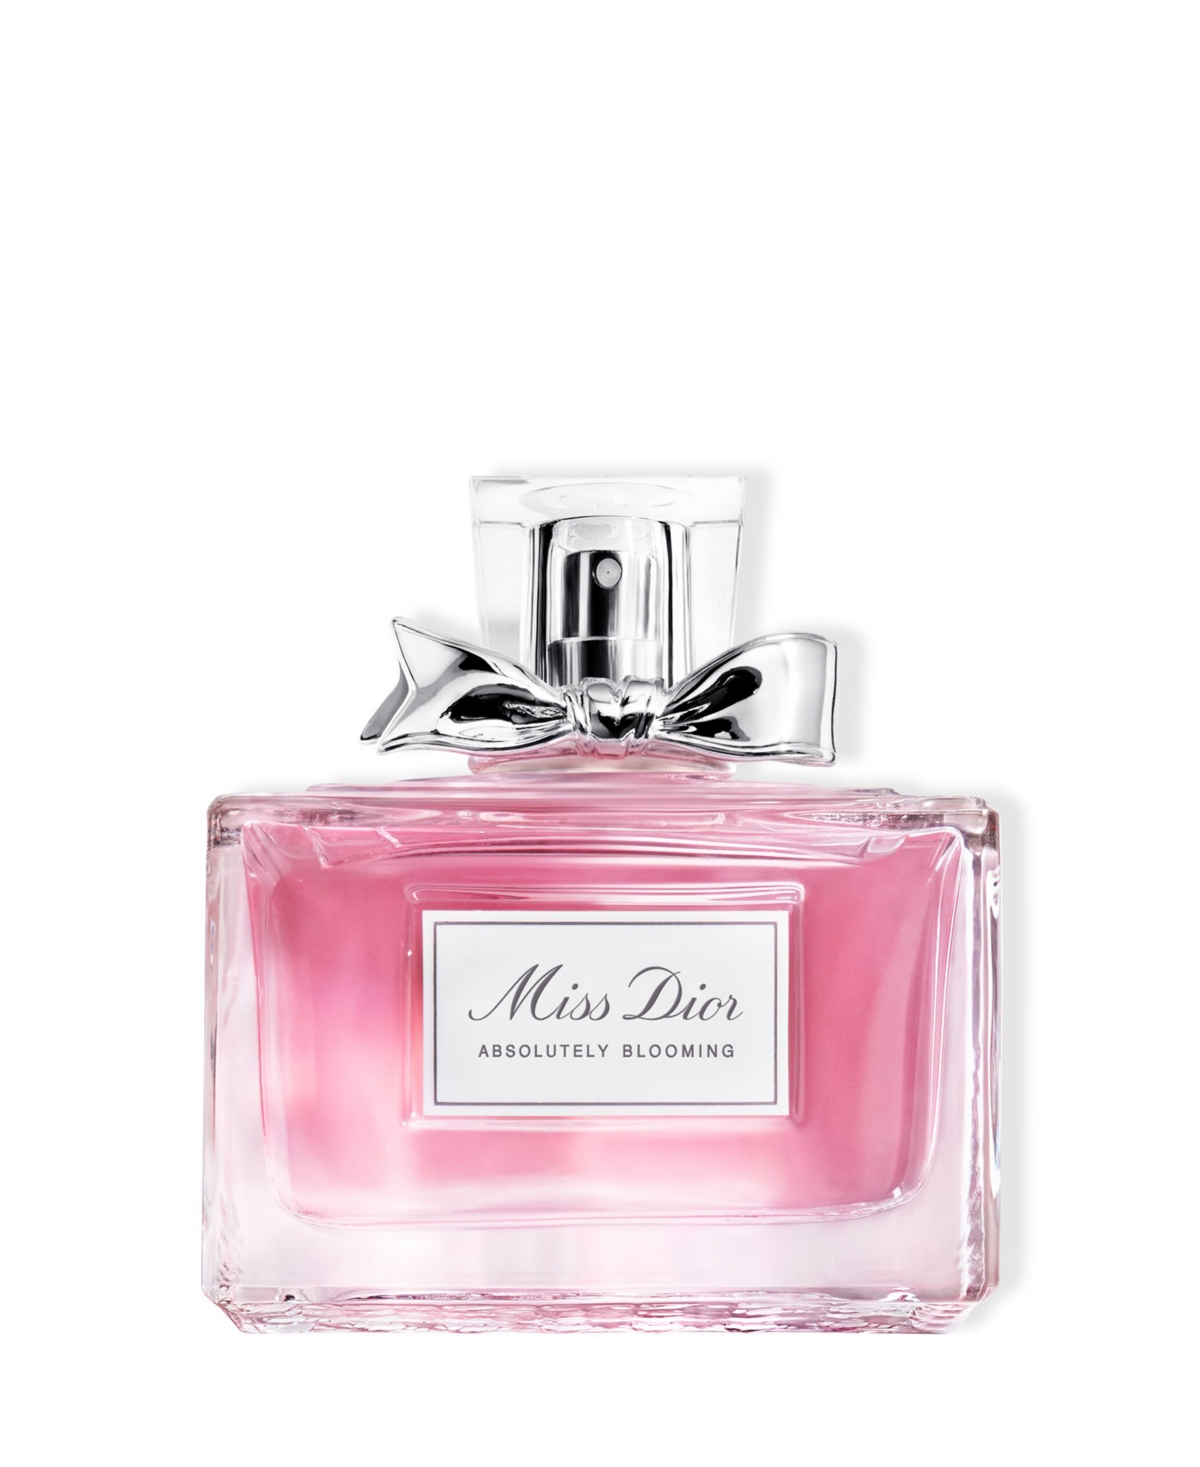 Miss Dior Absolutely Blooming Eau de Parfum Spray, 1.7 oz.